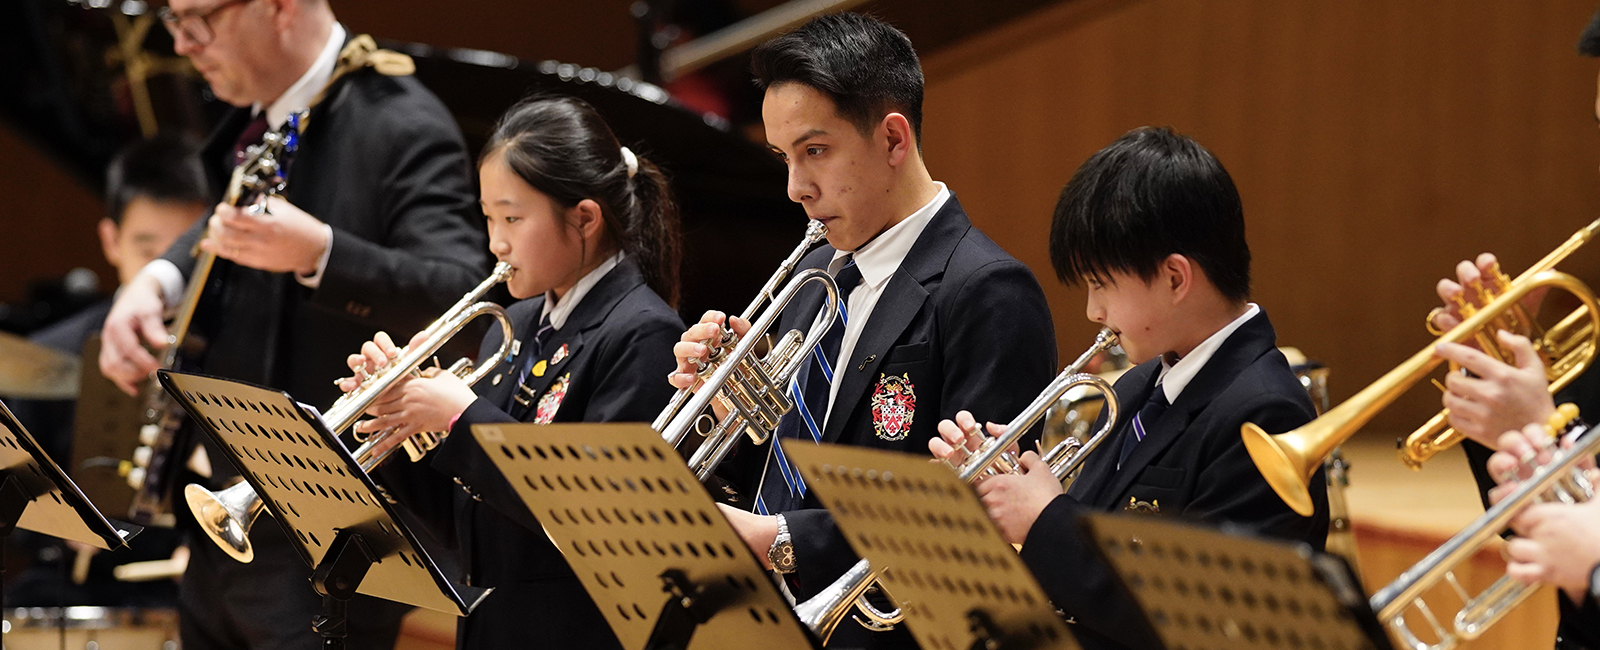 Senior School students perform in the Winter Concert